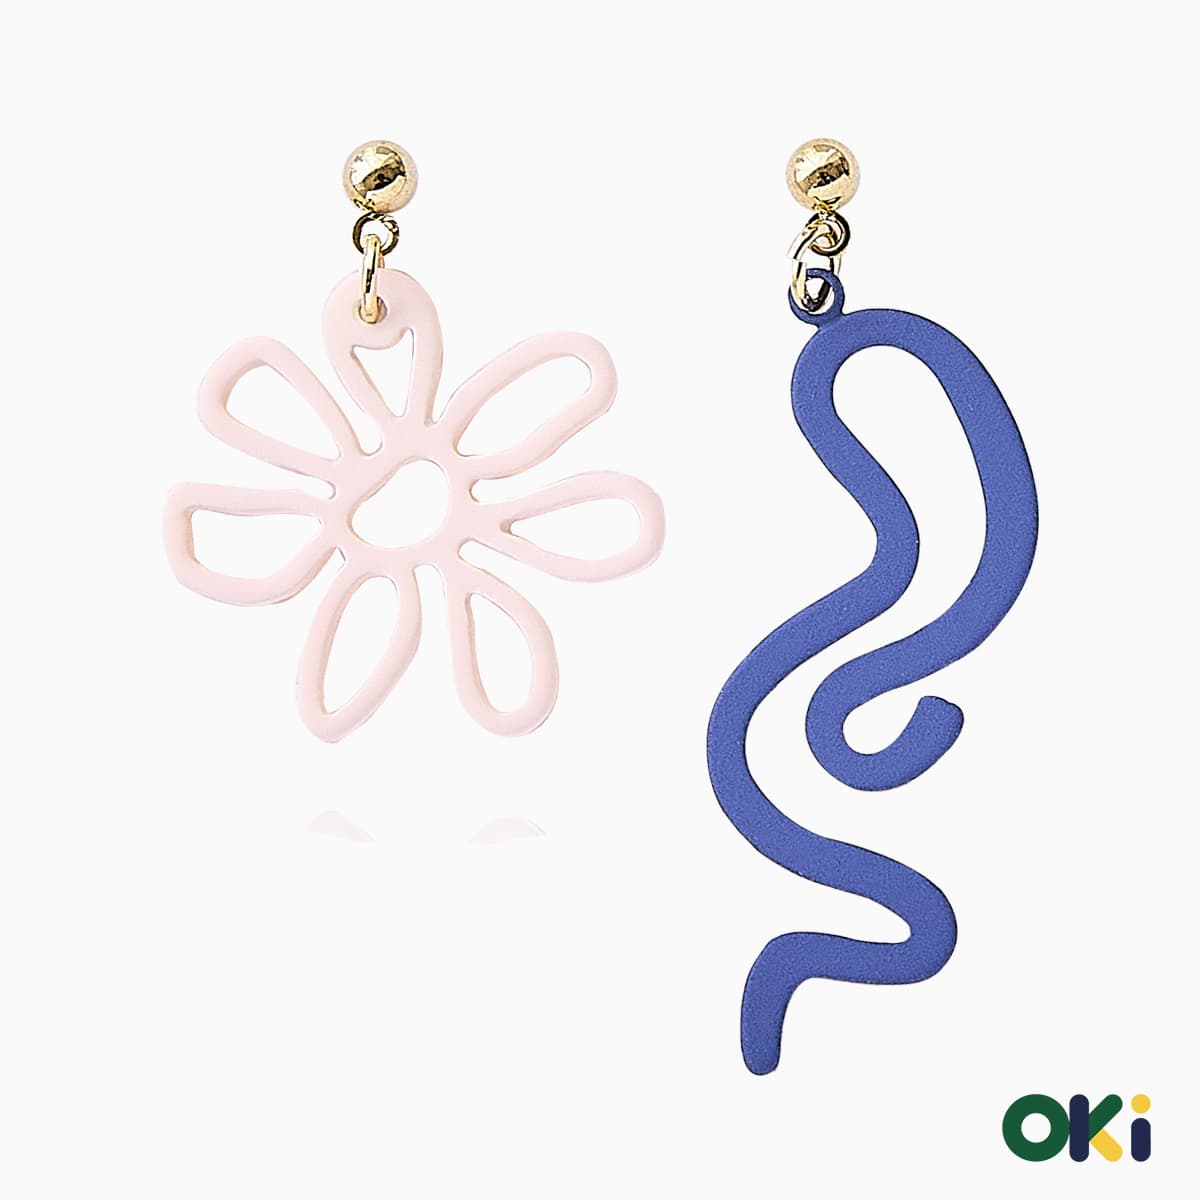 Breeze earrings OKi Fashion accessories jewely hypoallergenic